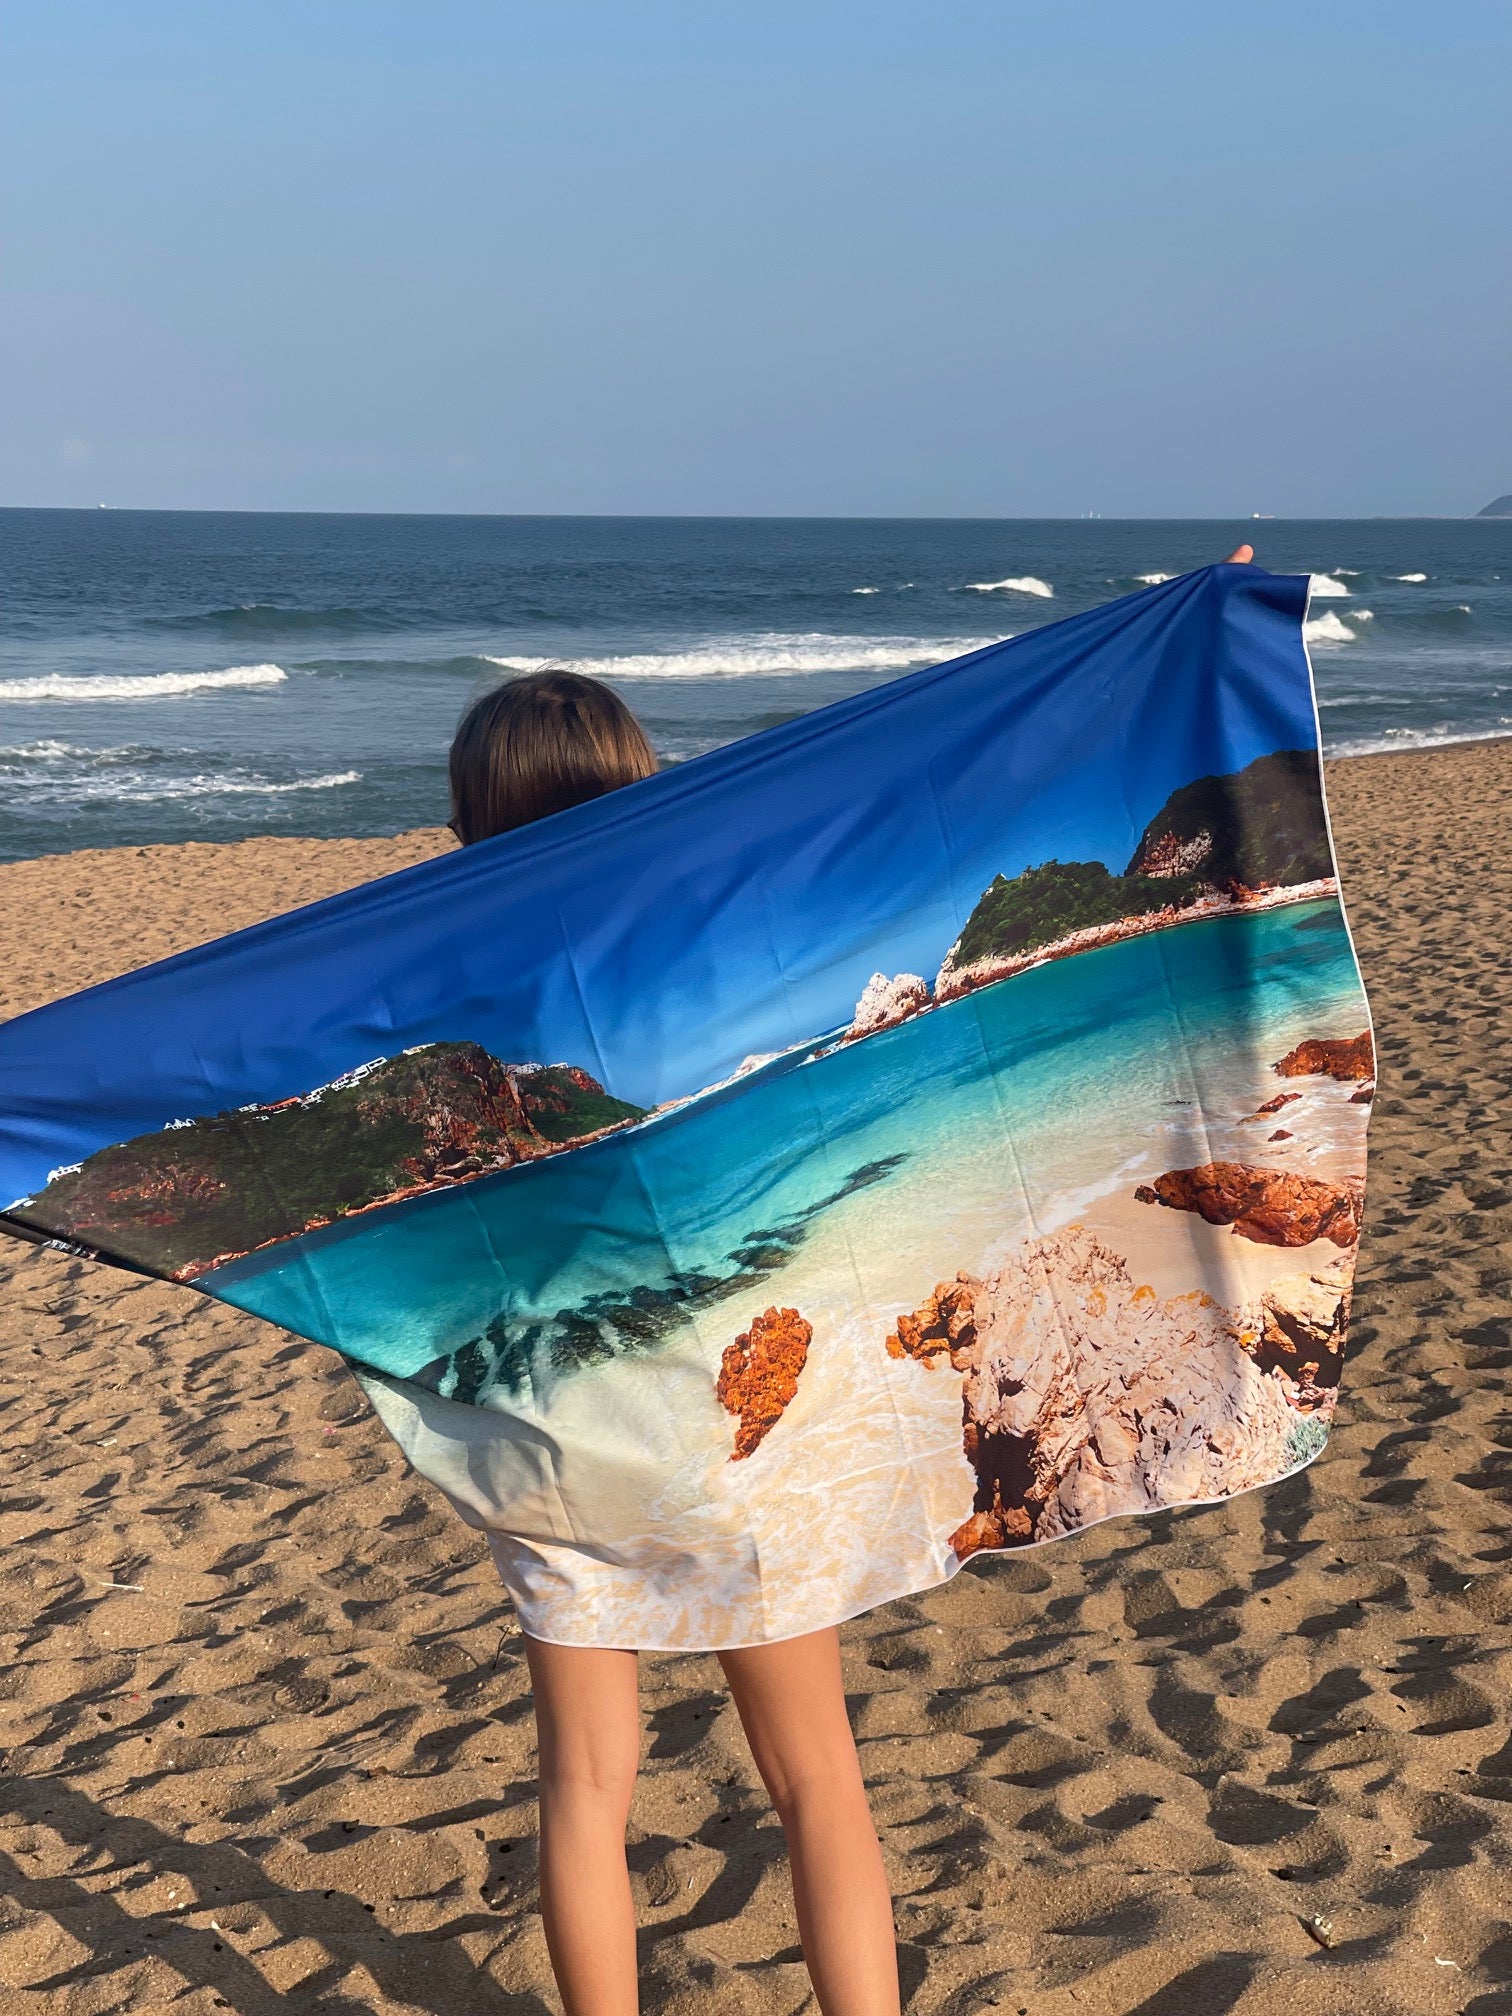 Microfibre XL Printed Towel - Beach View